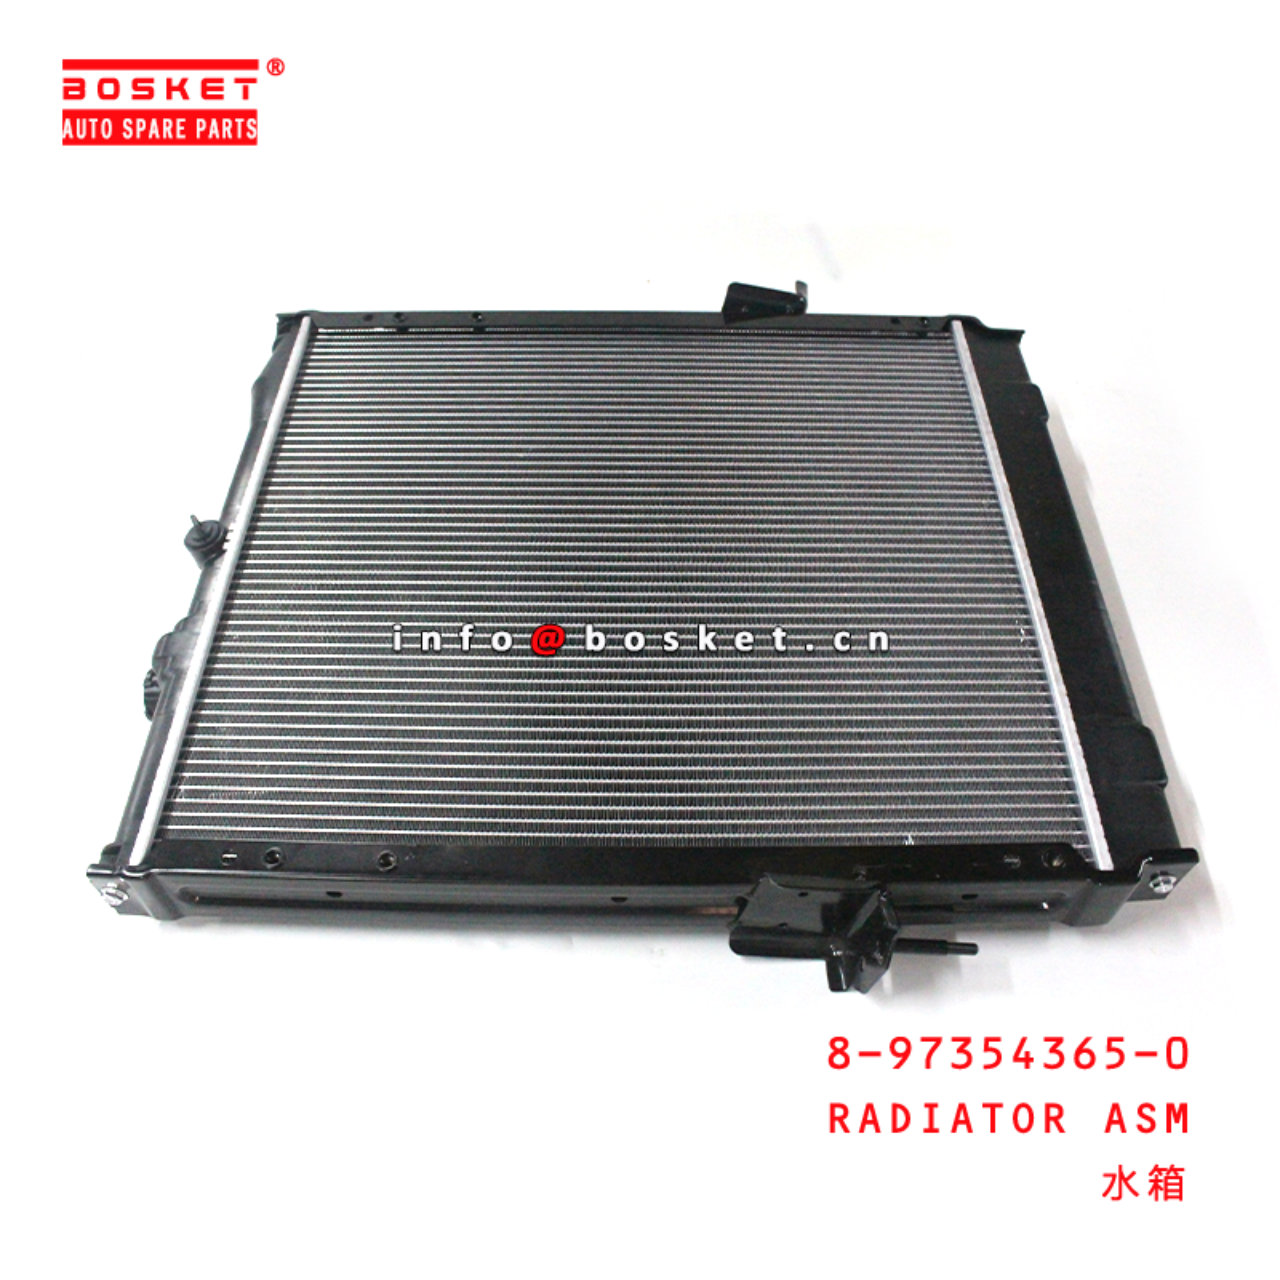 8-97354365-0 Radiator Assembly 8973543650 Suitable for ISUZU NPR 